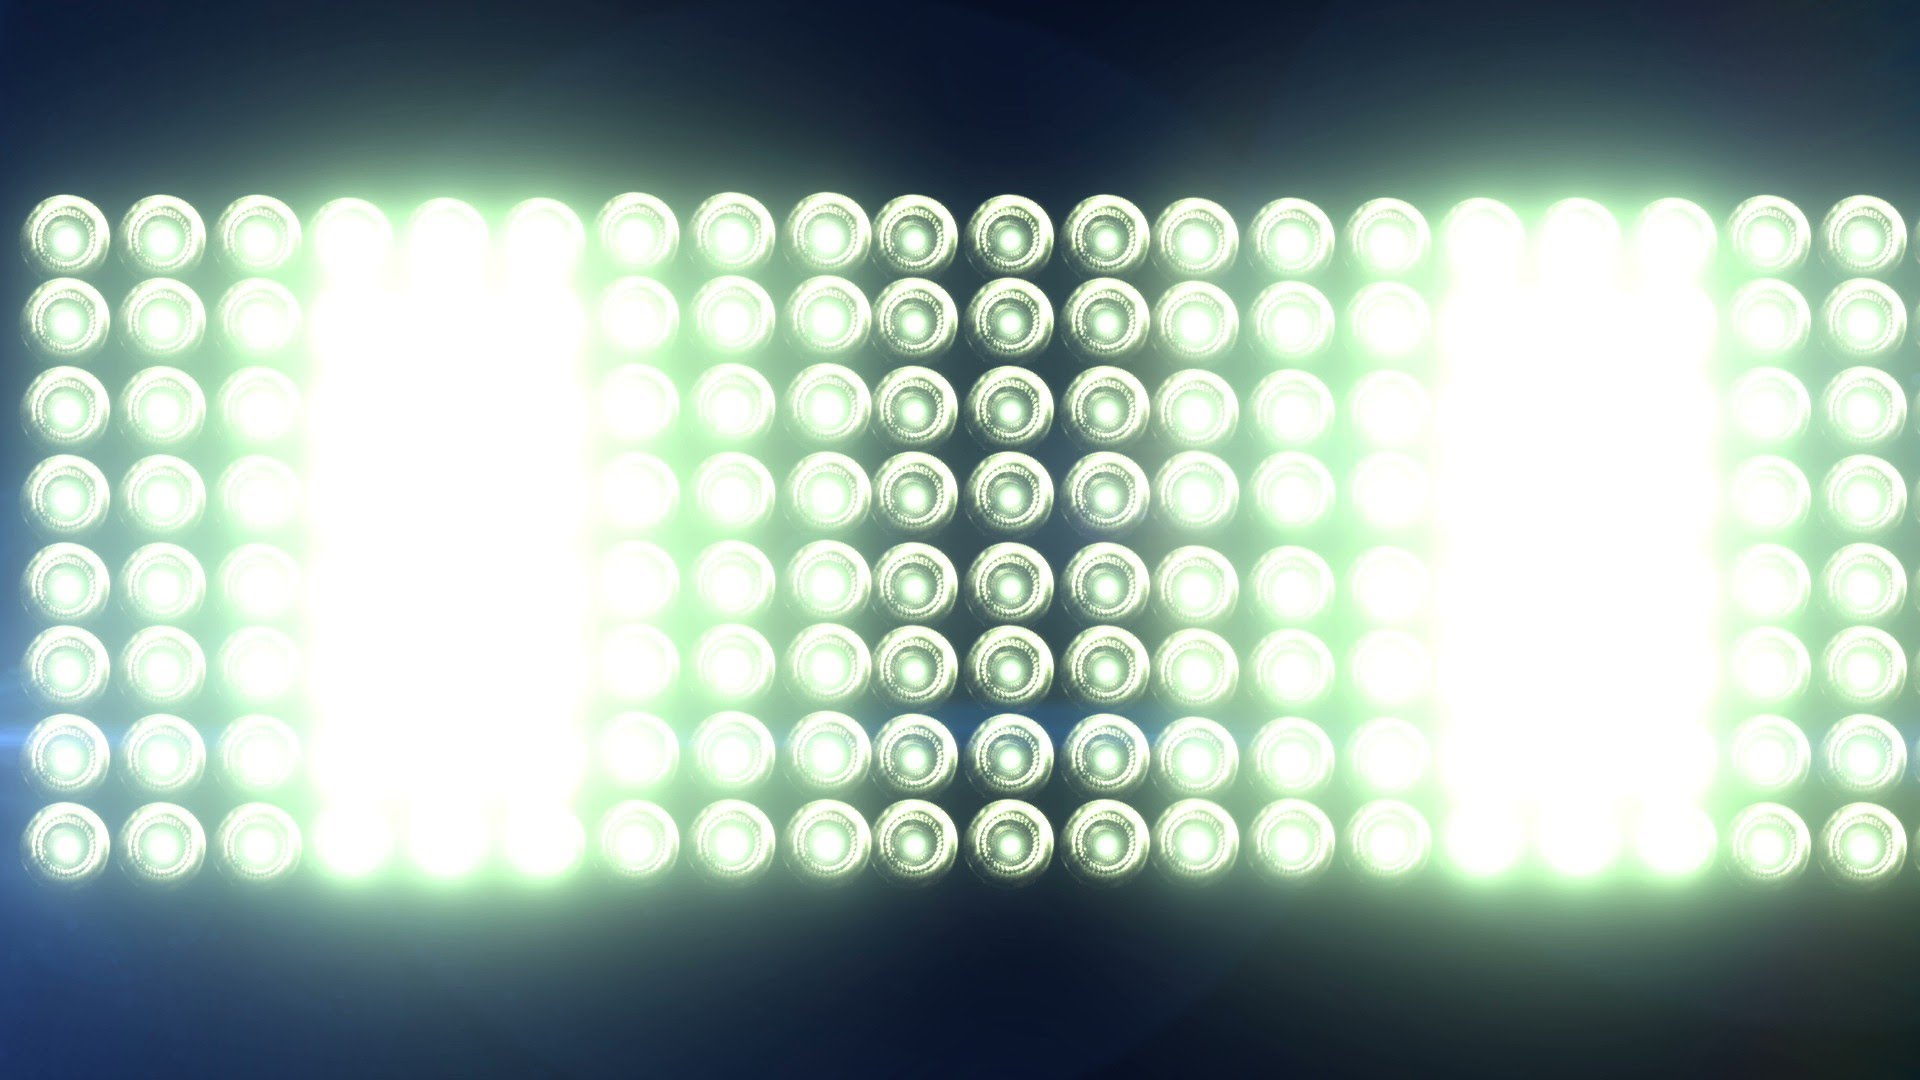 Big Horizontal Flashing Floodlights With Lens Flare - free HD vfx ...